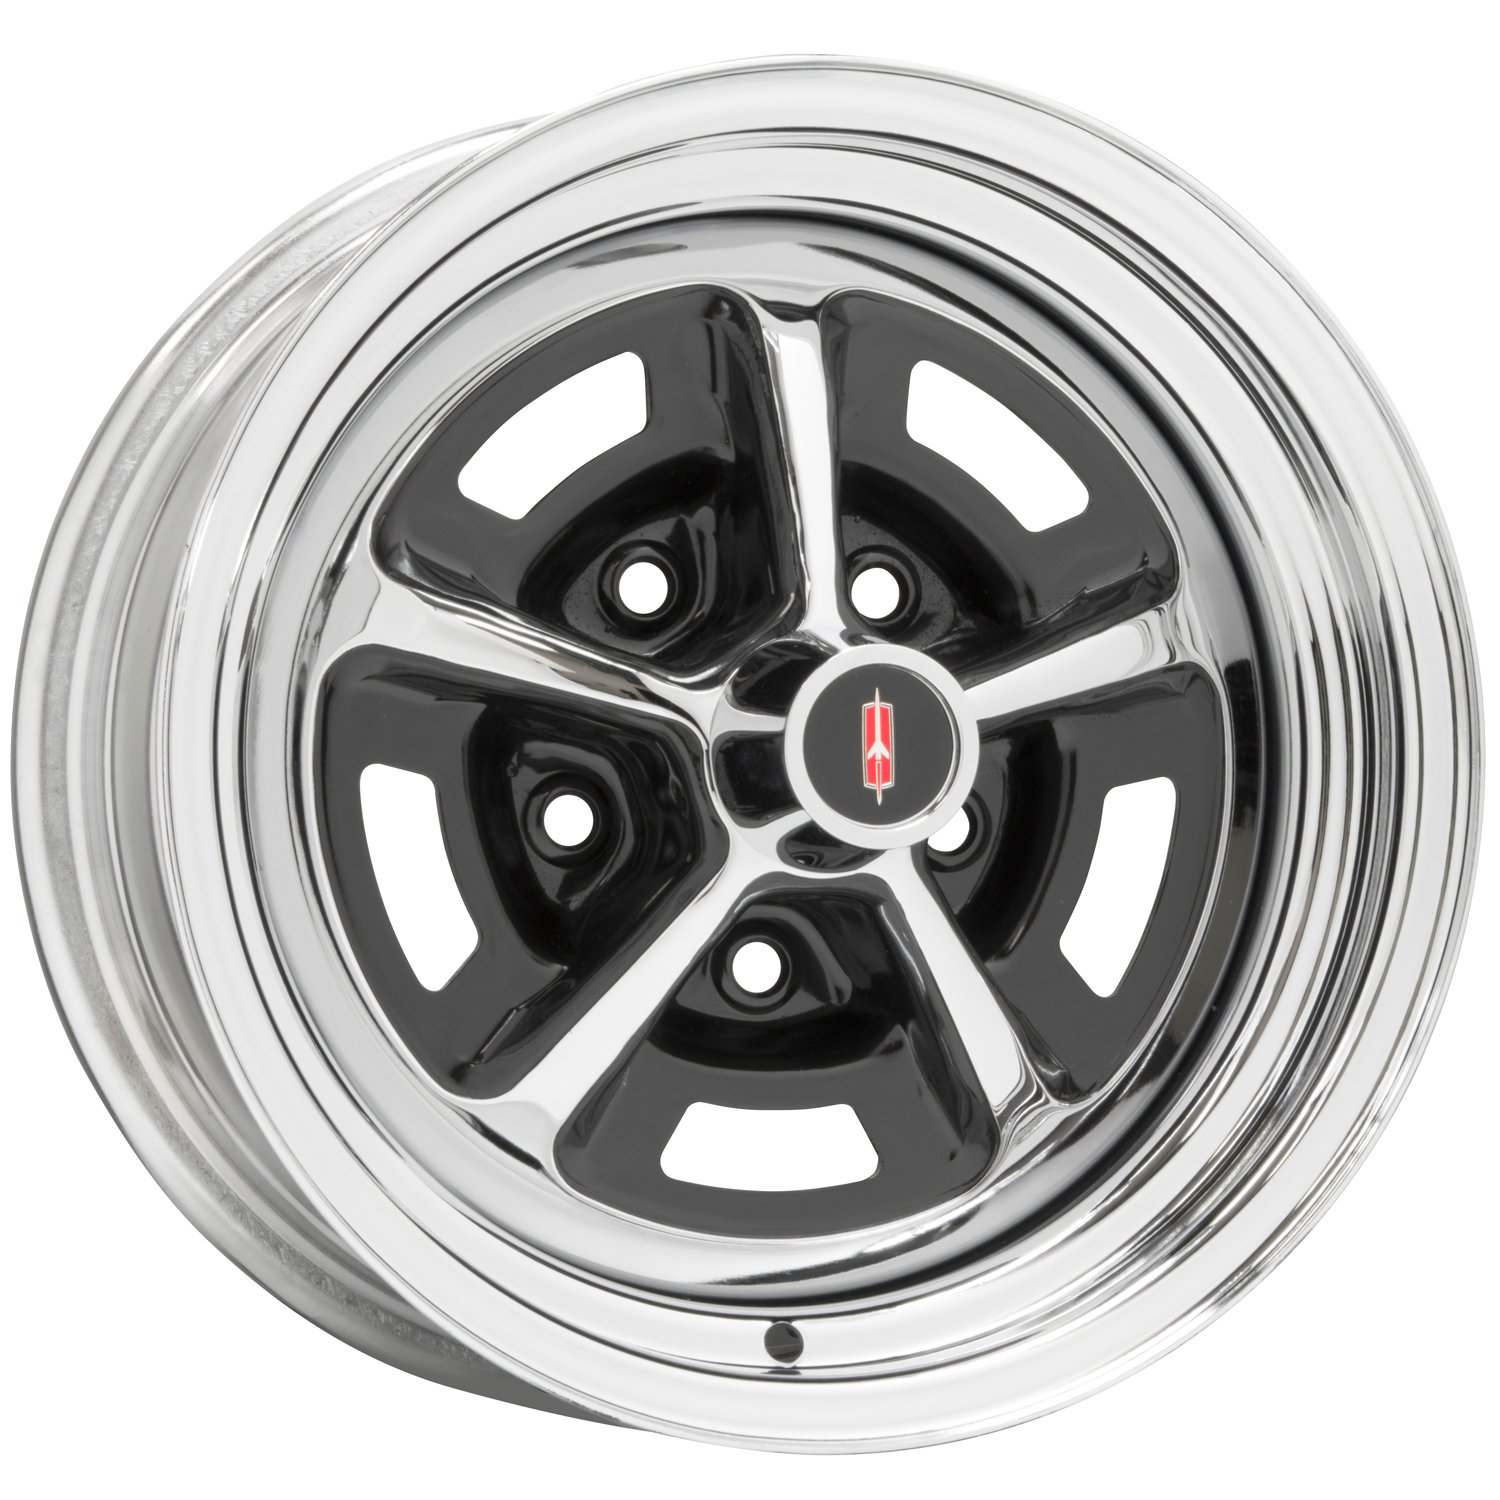 52-5834042 52-Series Oldsmobile SSI Wheel [Size: 15" x 8"]